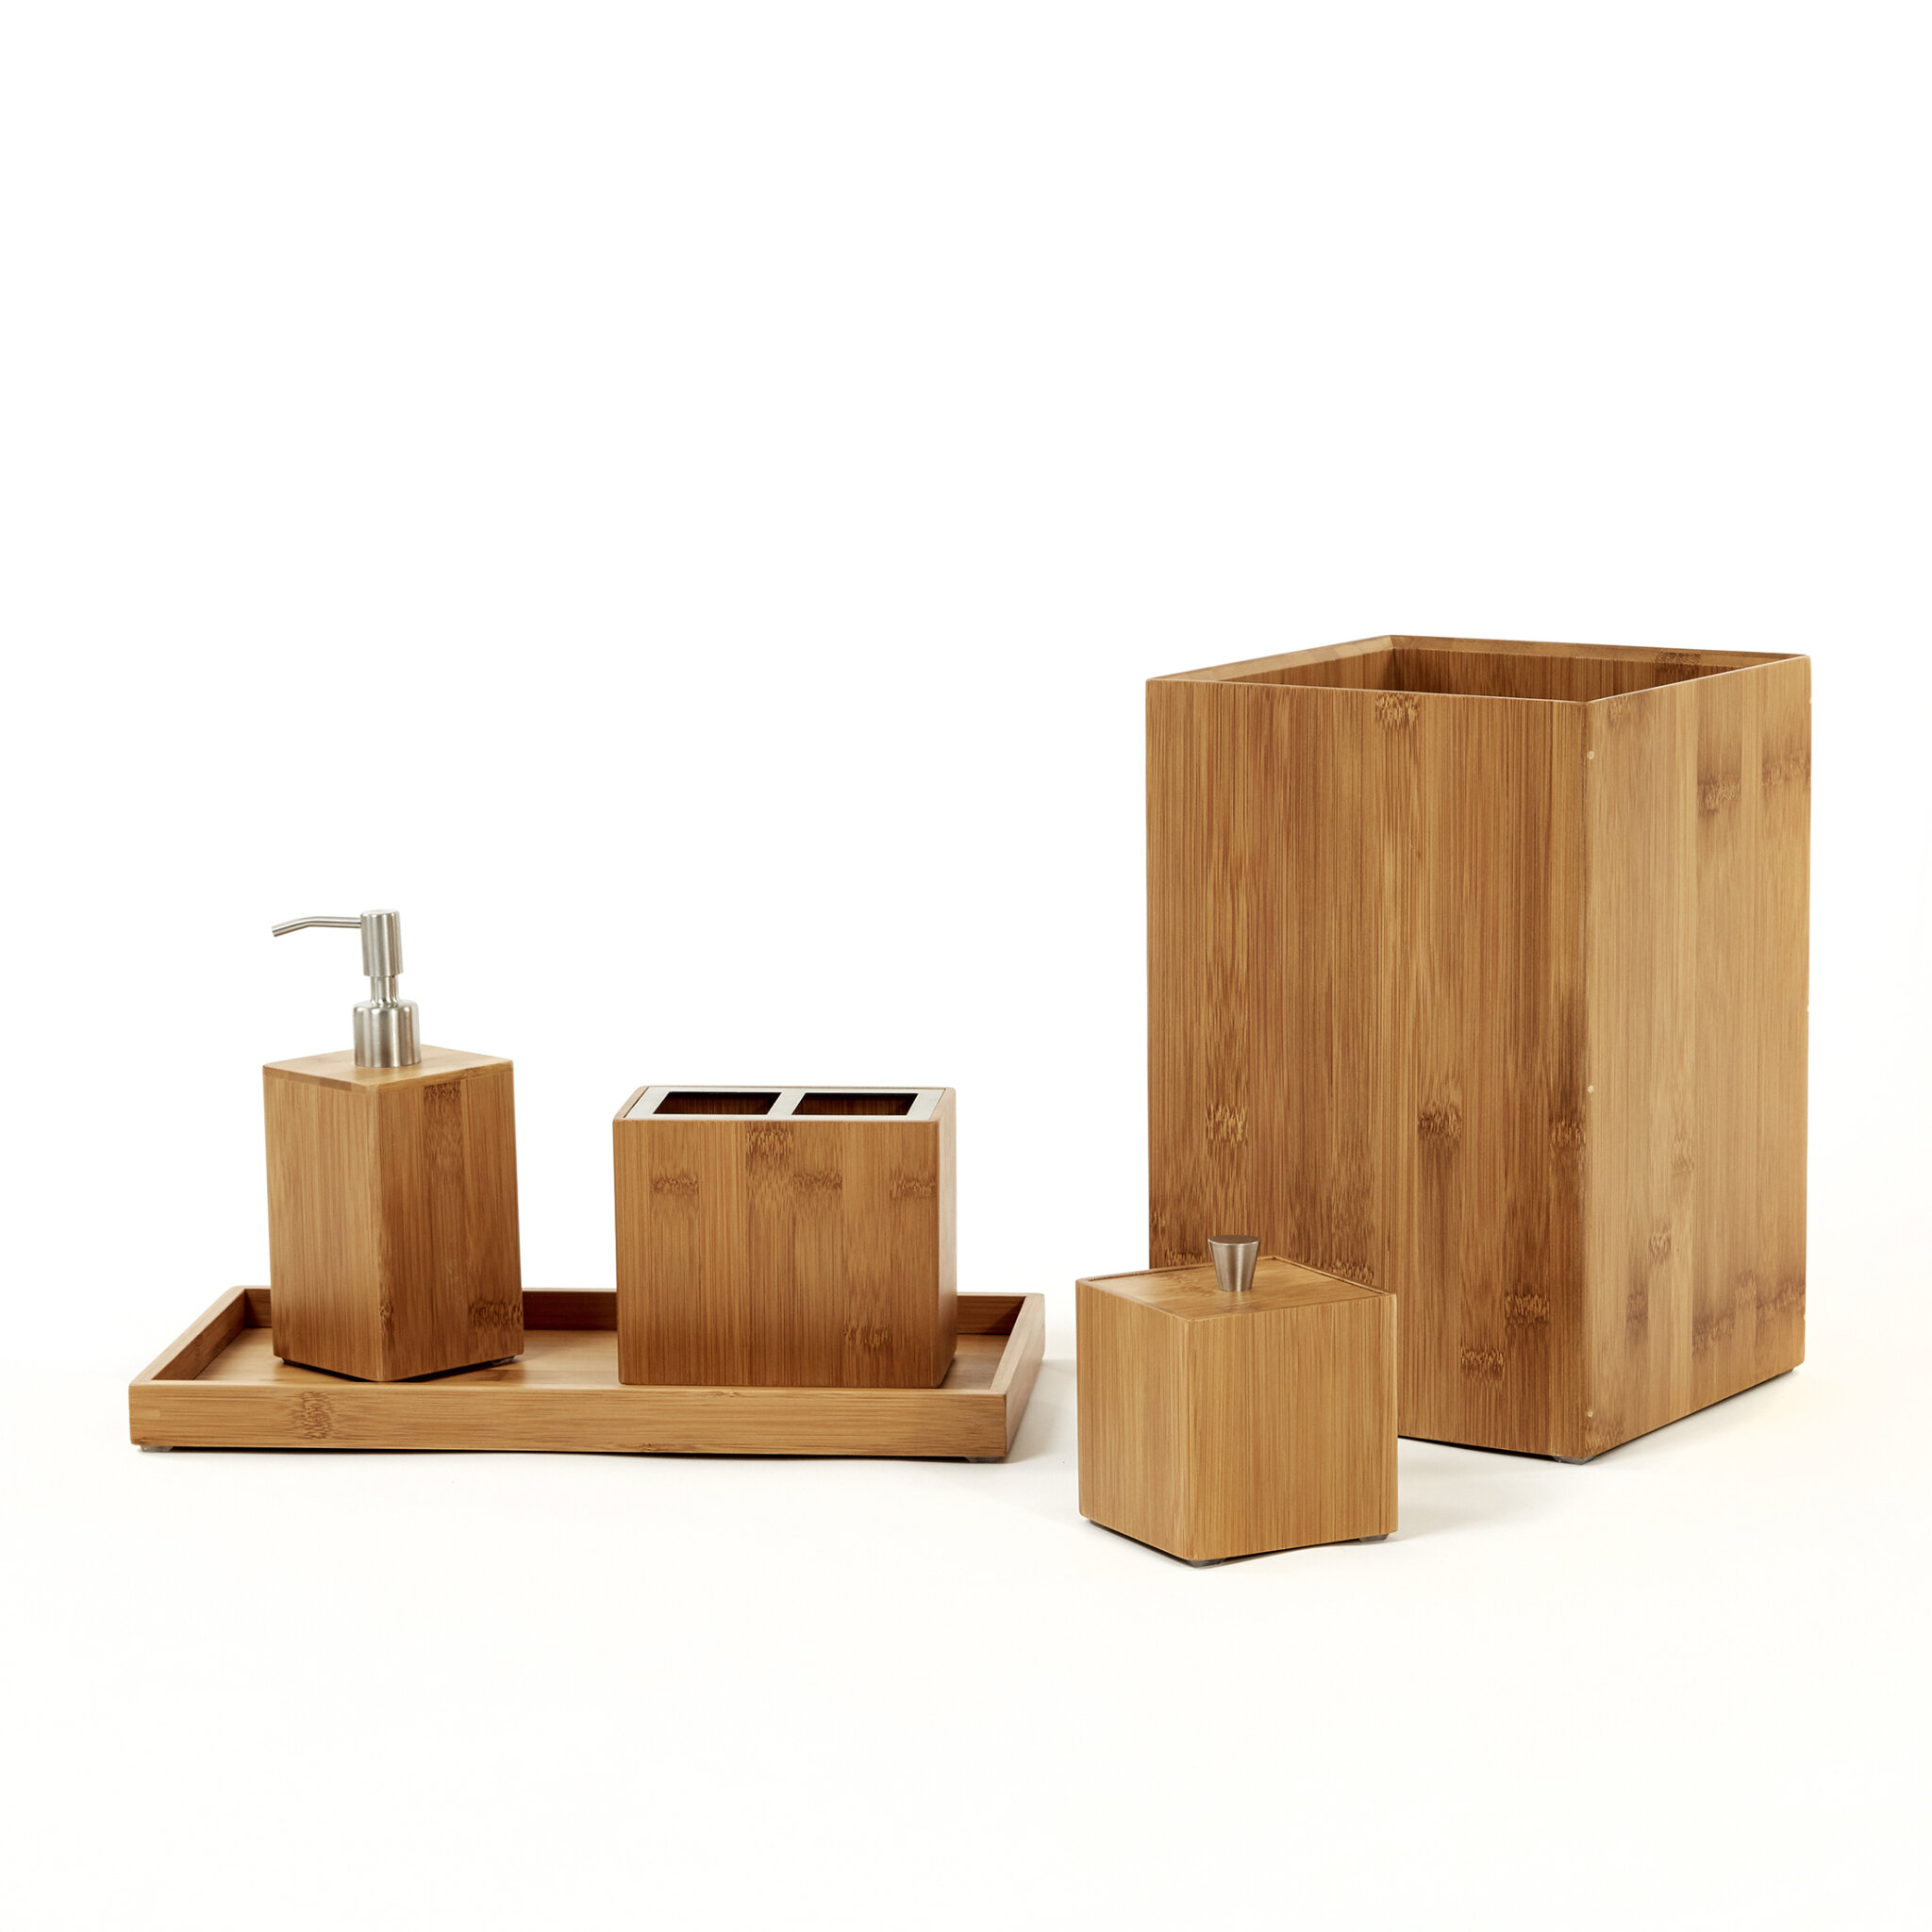 Allmodern Cillian Bamboo 5 Piece Bathroom Accessory Set Reviews Wayfair